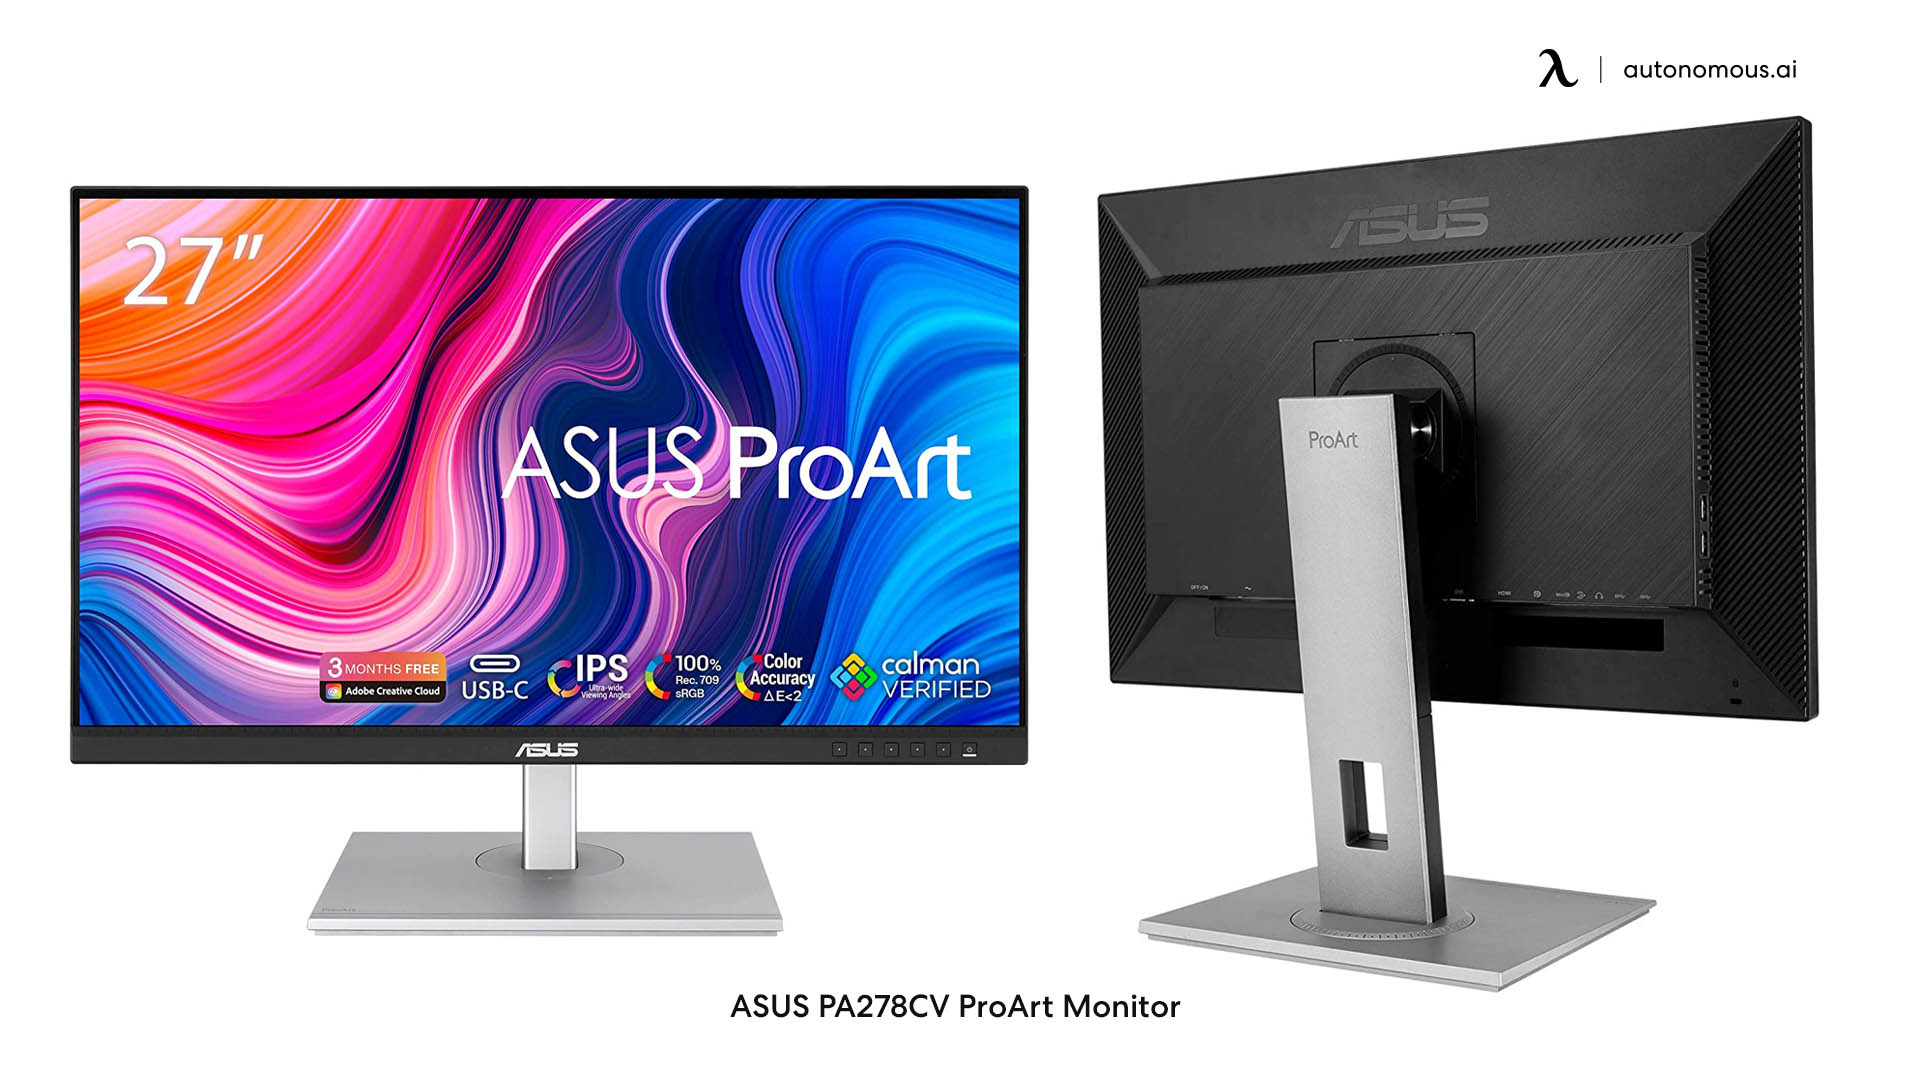 ASUS PA278CV ProArt Monitor